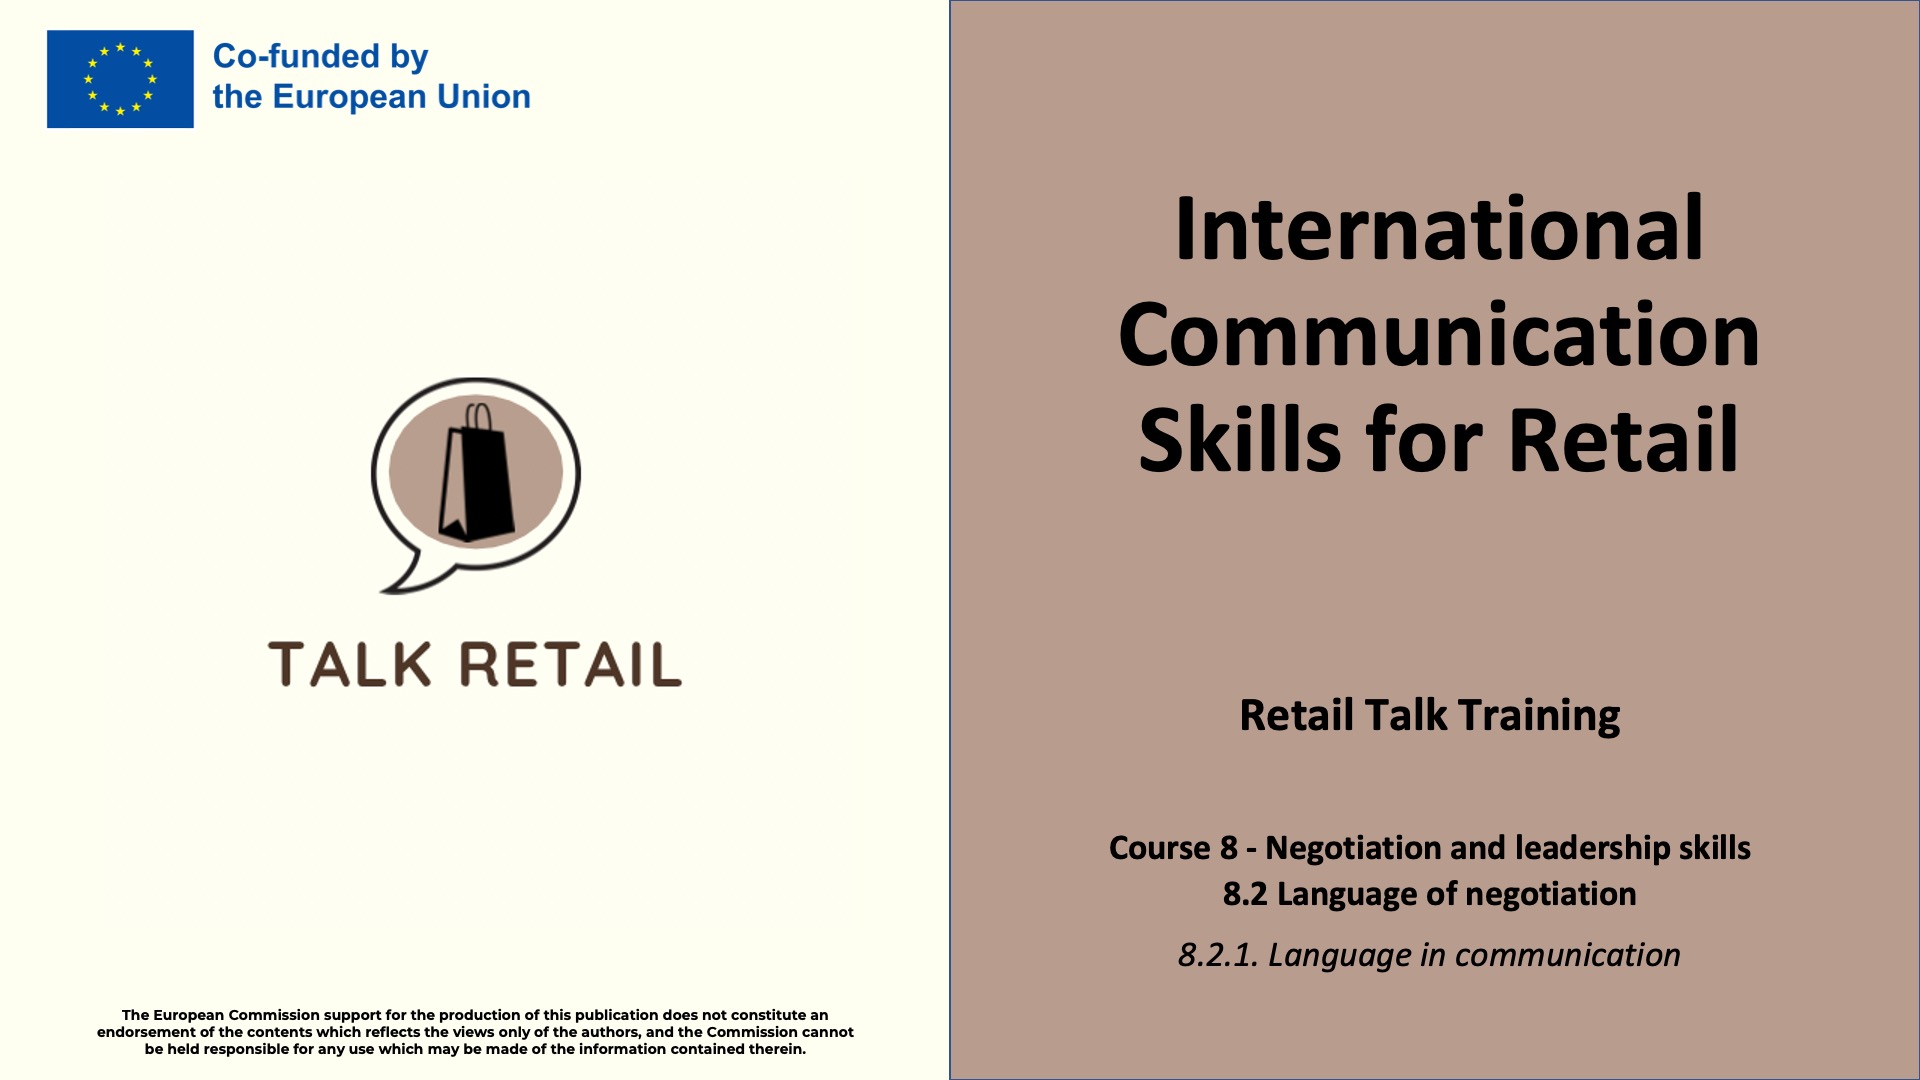 Course 8 - Unit 2 - Language of Negotiation